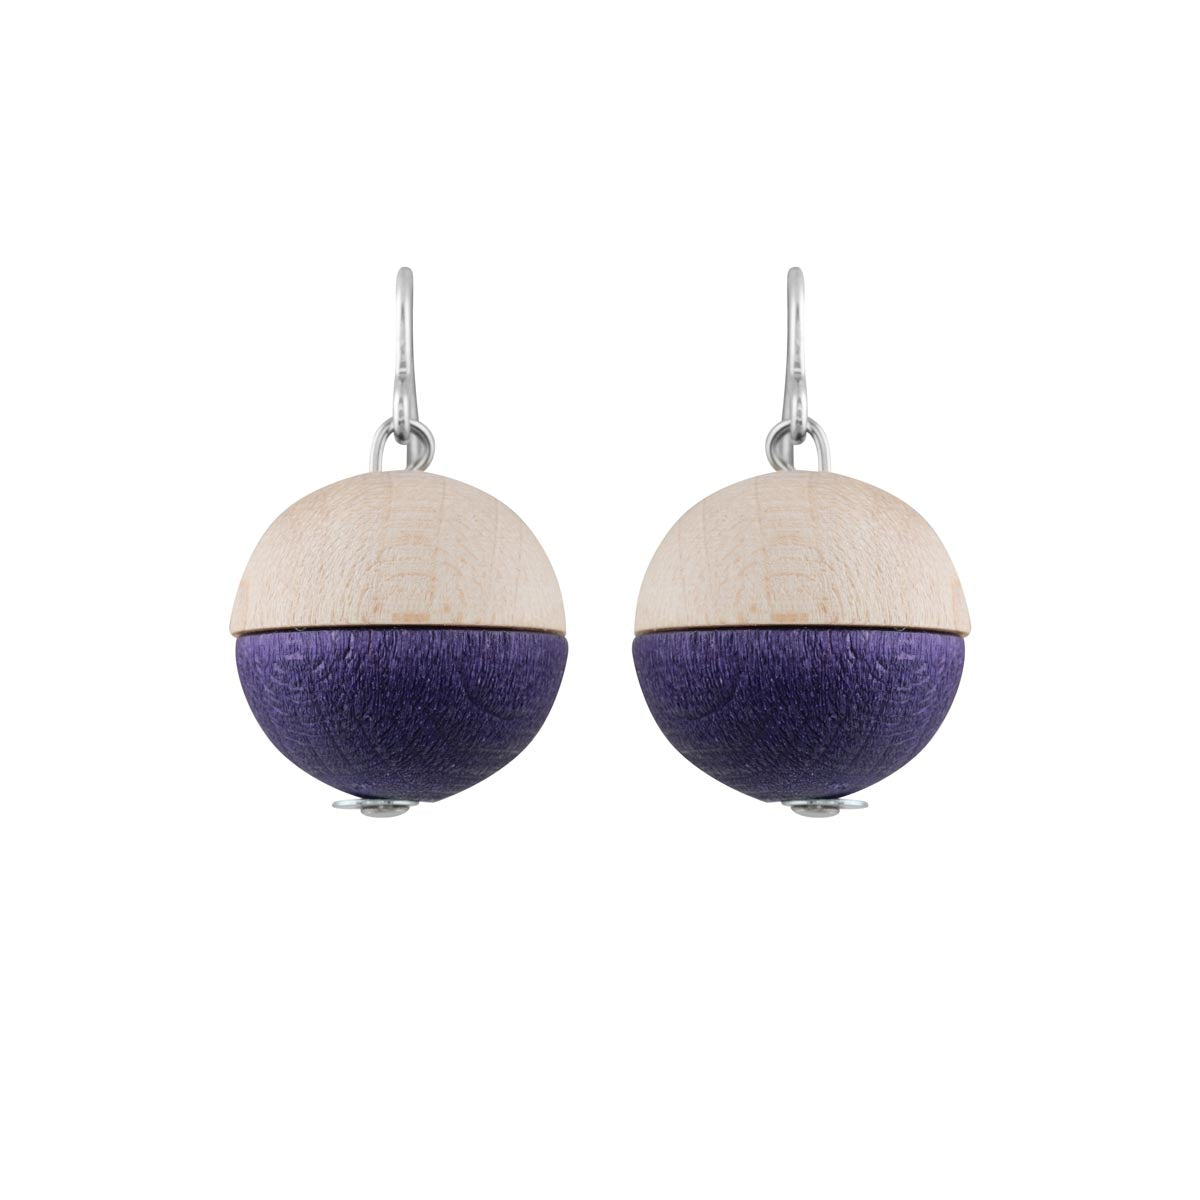 Leila earrings, wood and purple